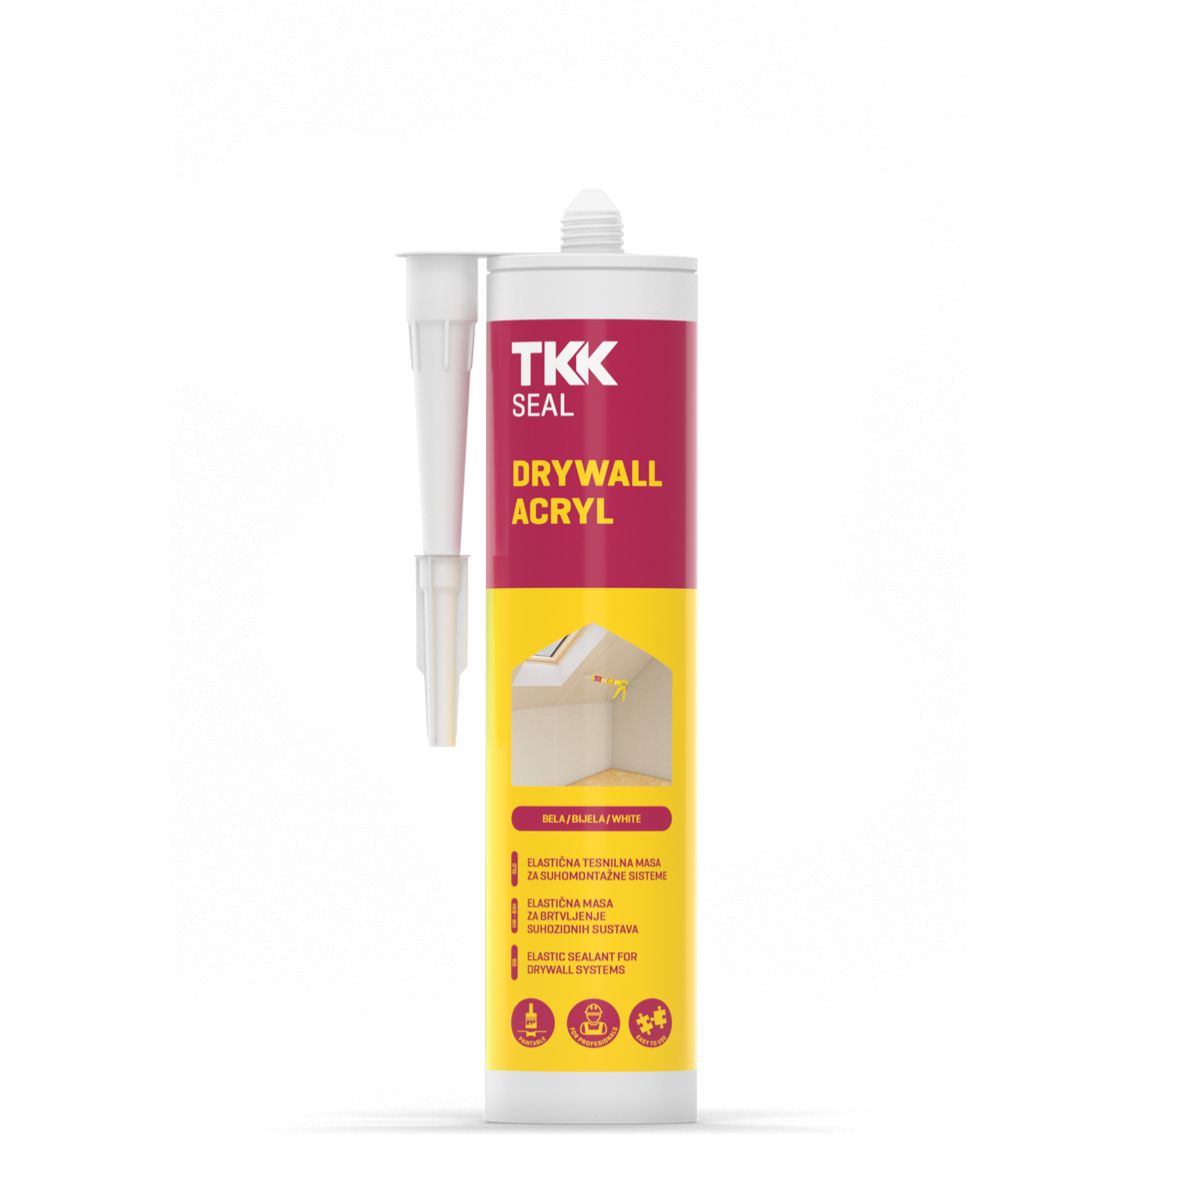 TKK Seal Drywall Acryl